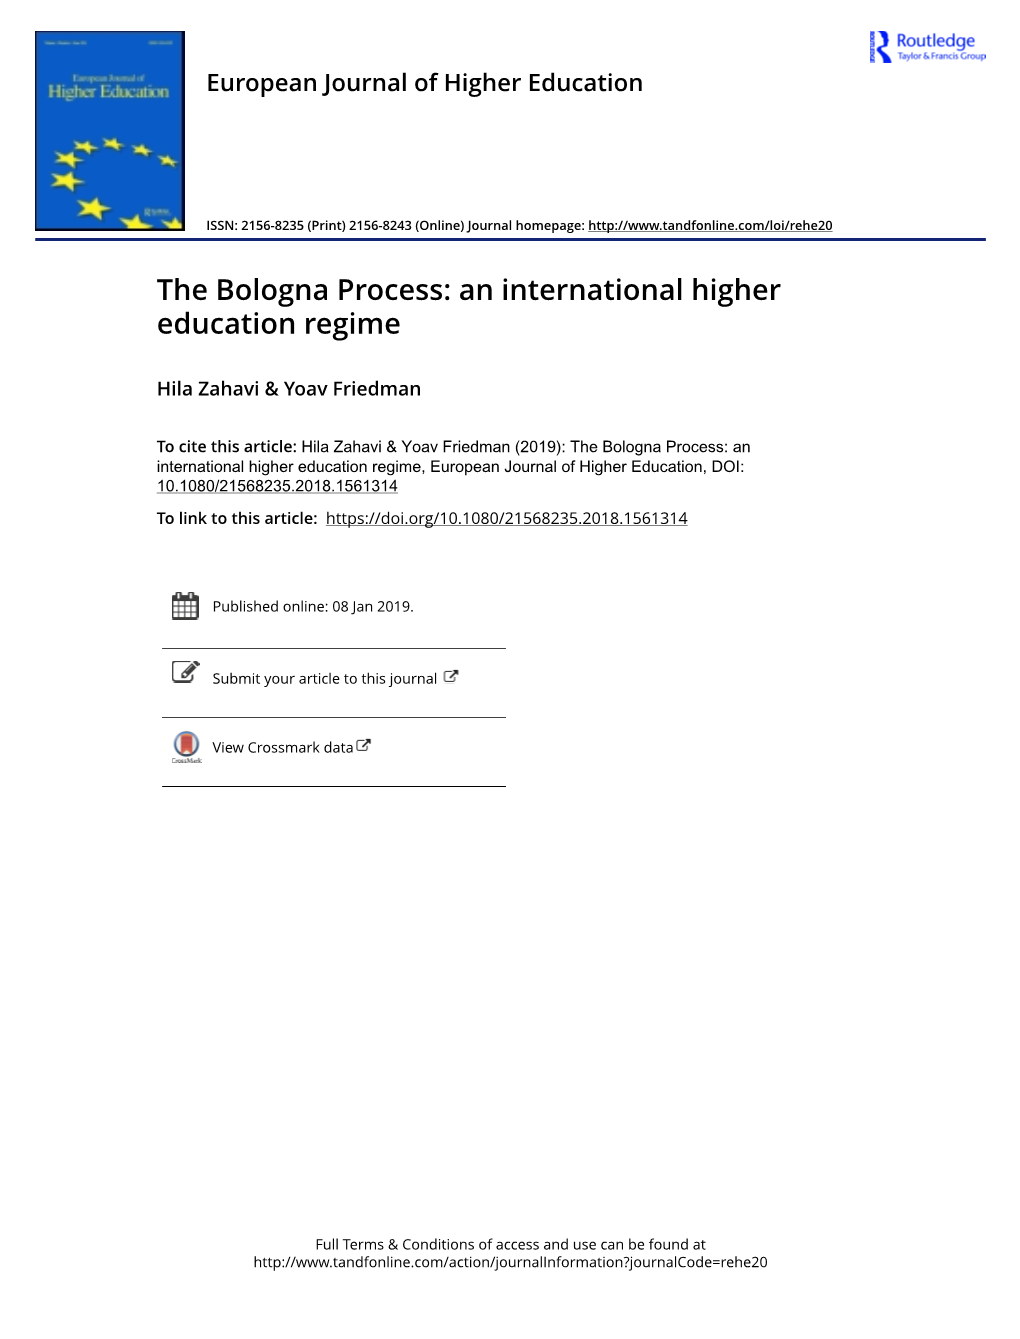 The Bologna Process: an International Higher Education Regime